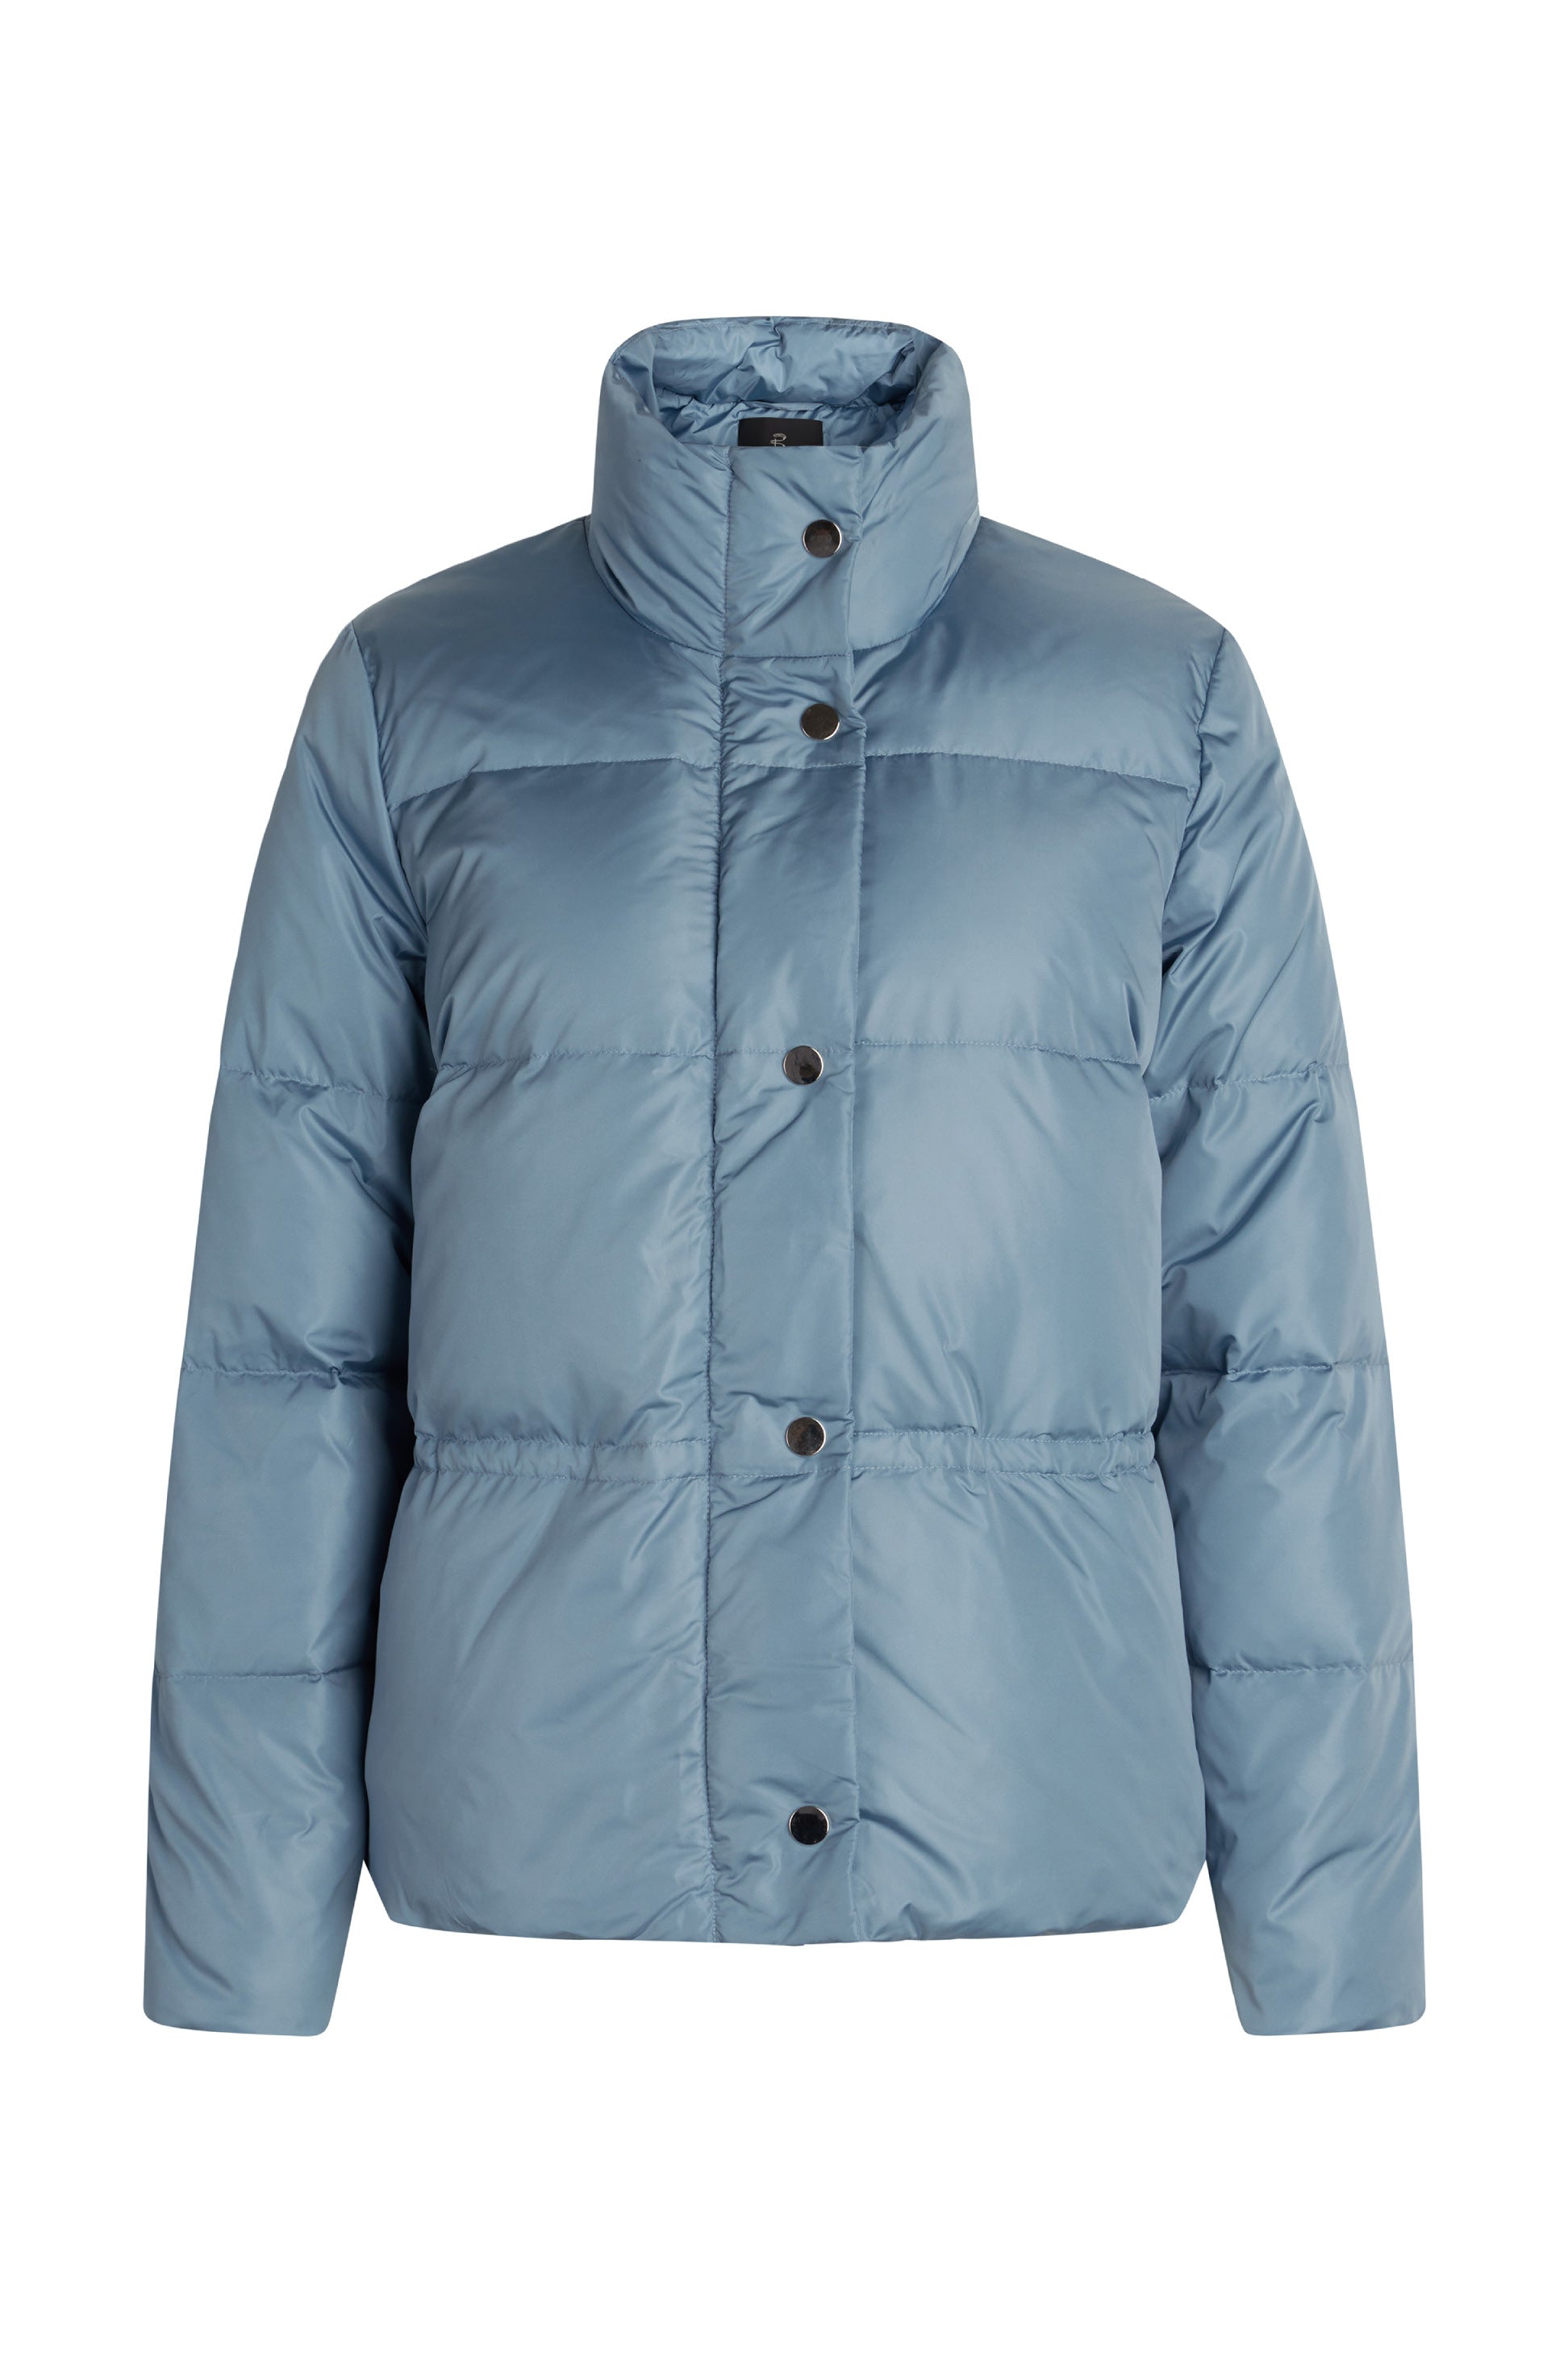 ARUNDEL deadstock blue sleeveless puffer jacket